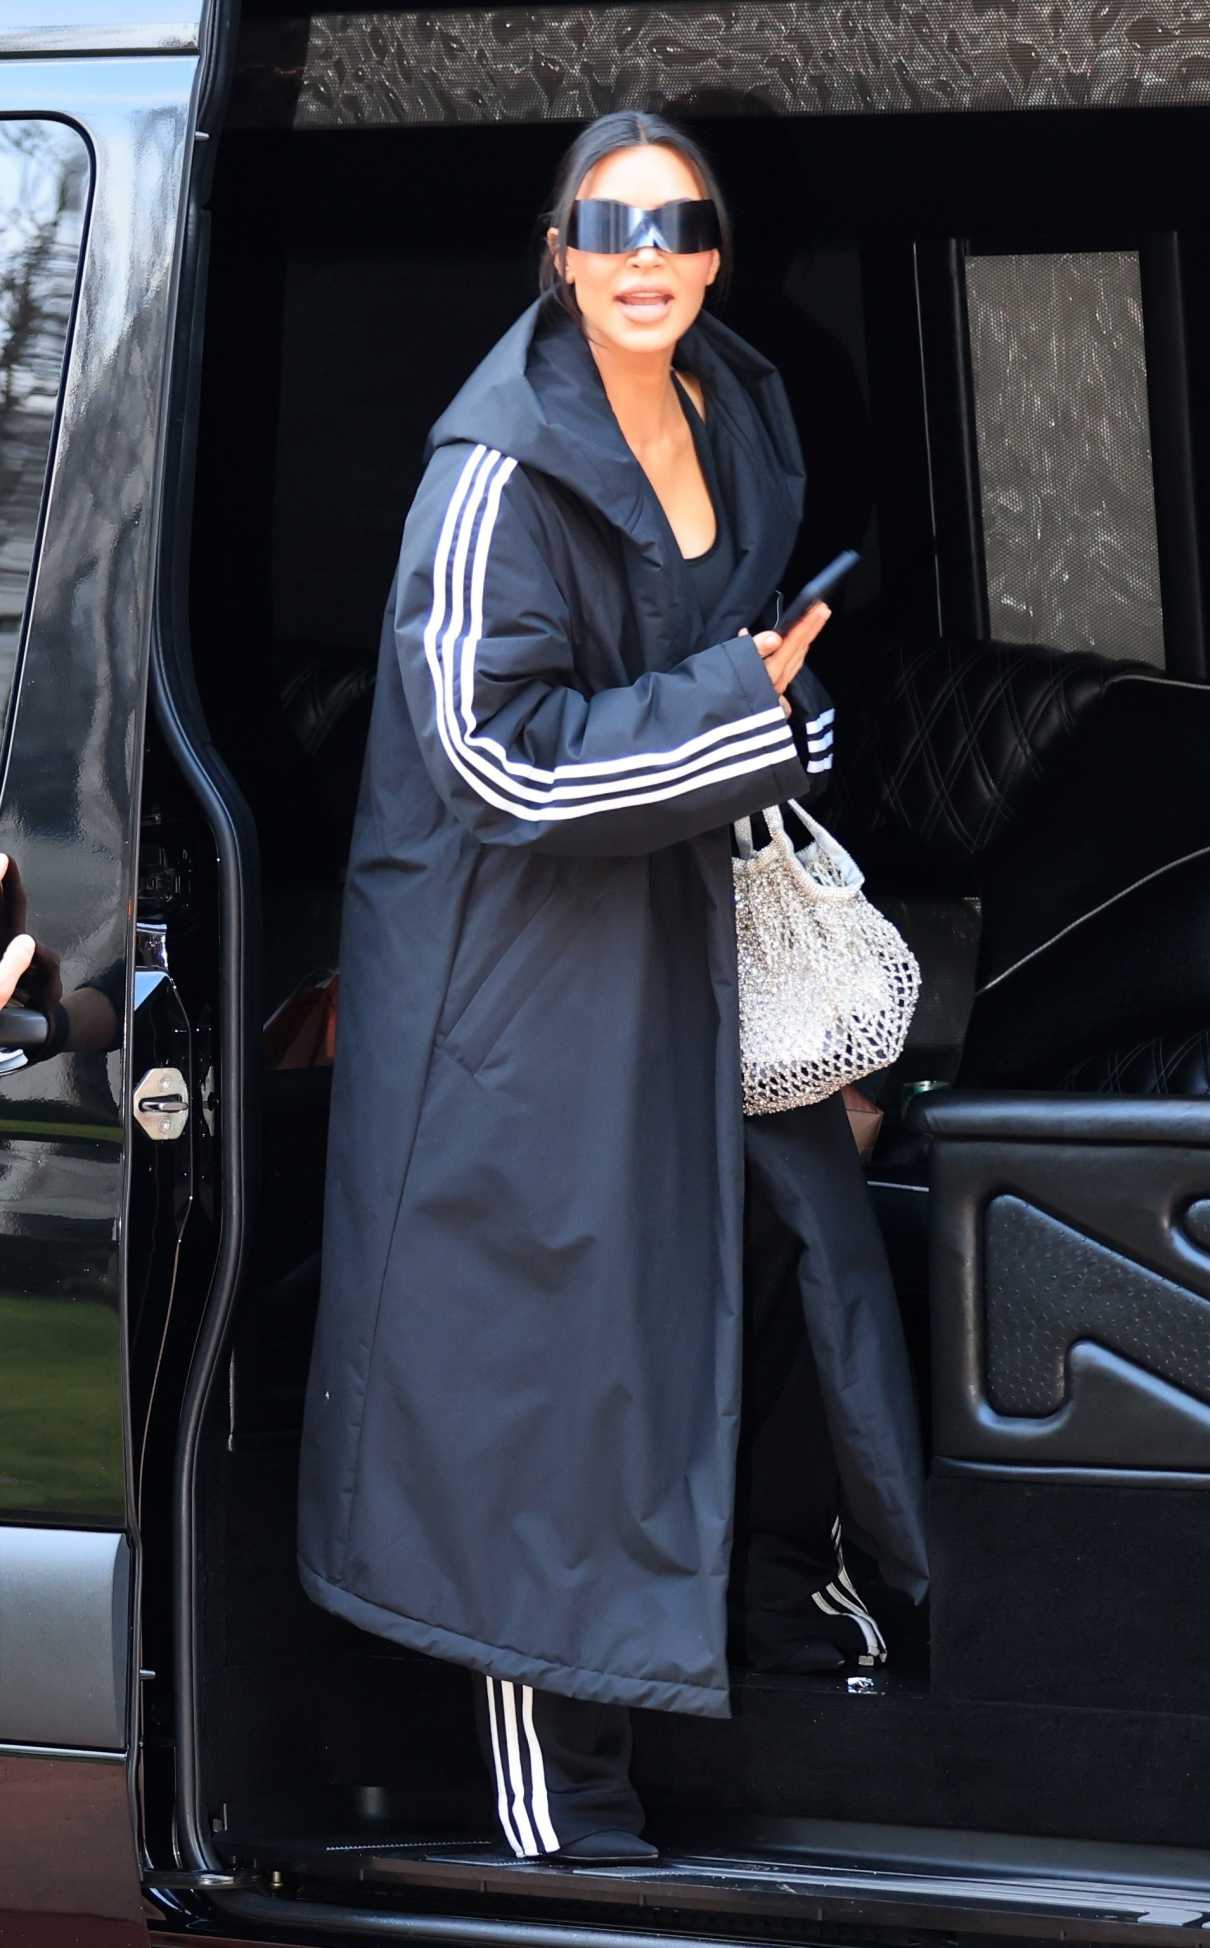 Kim Kardashian in Adidas Attire